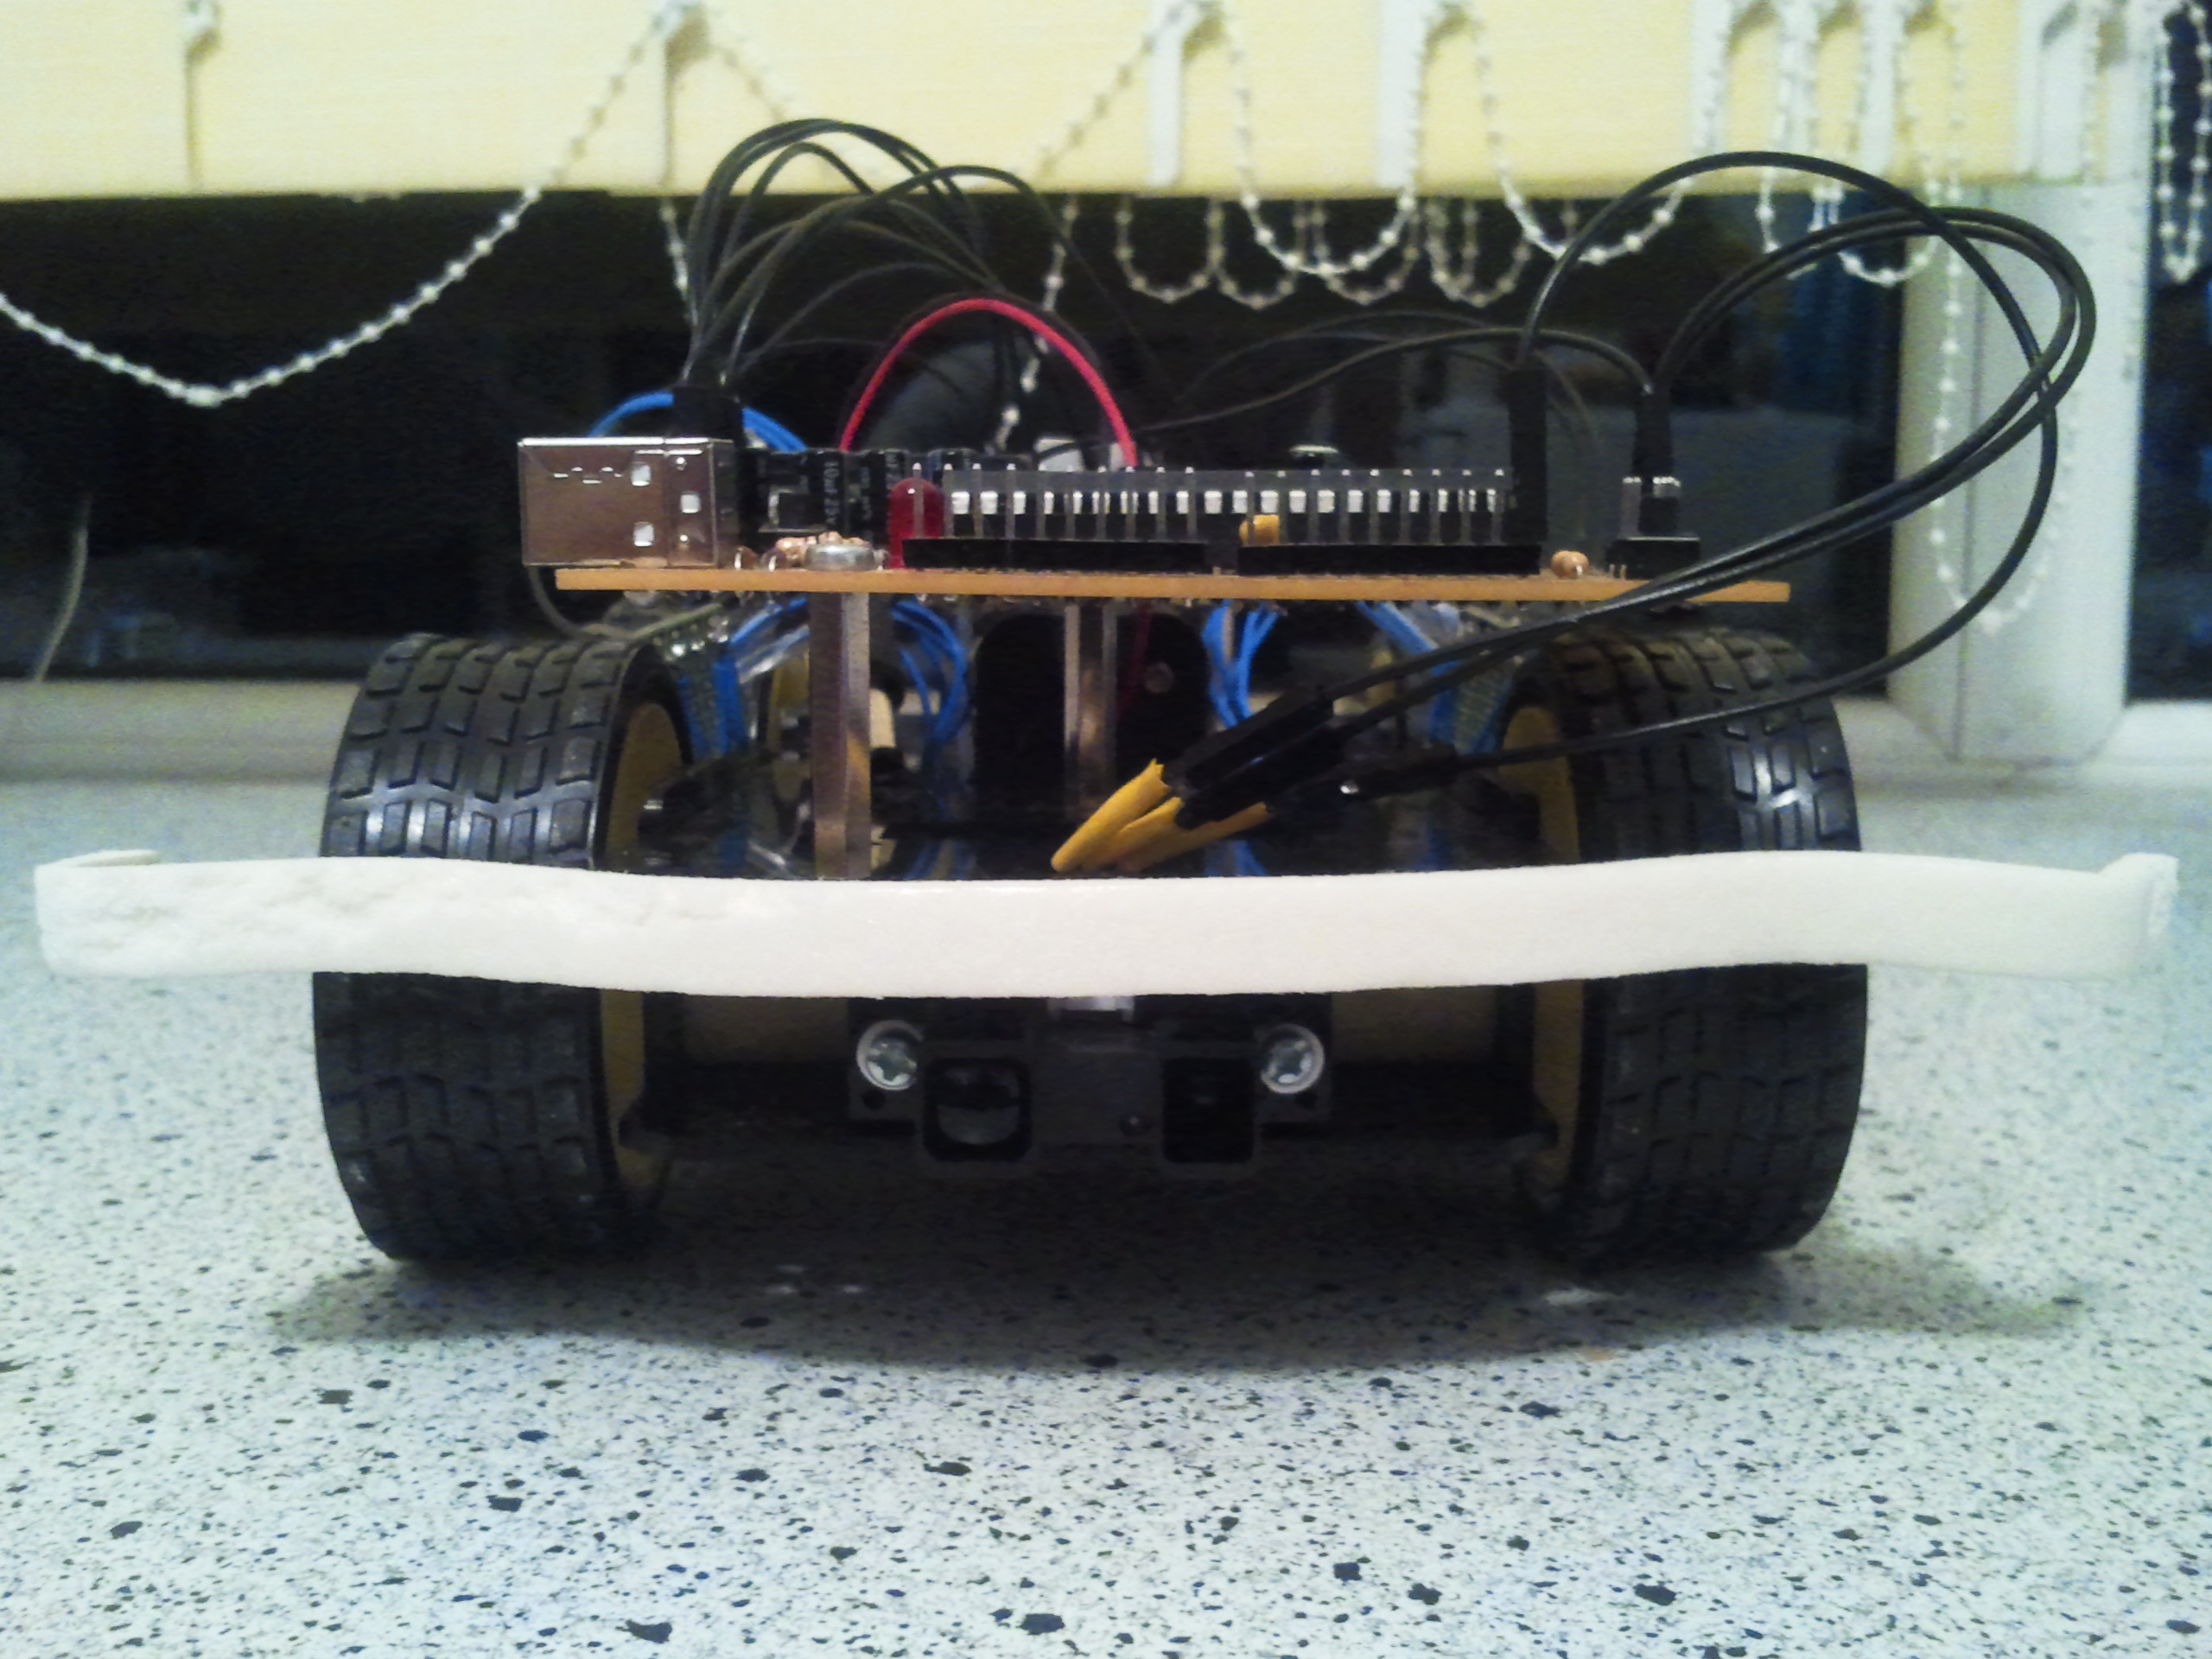 pm:prj2012:abostan:explore_rover3.jpg